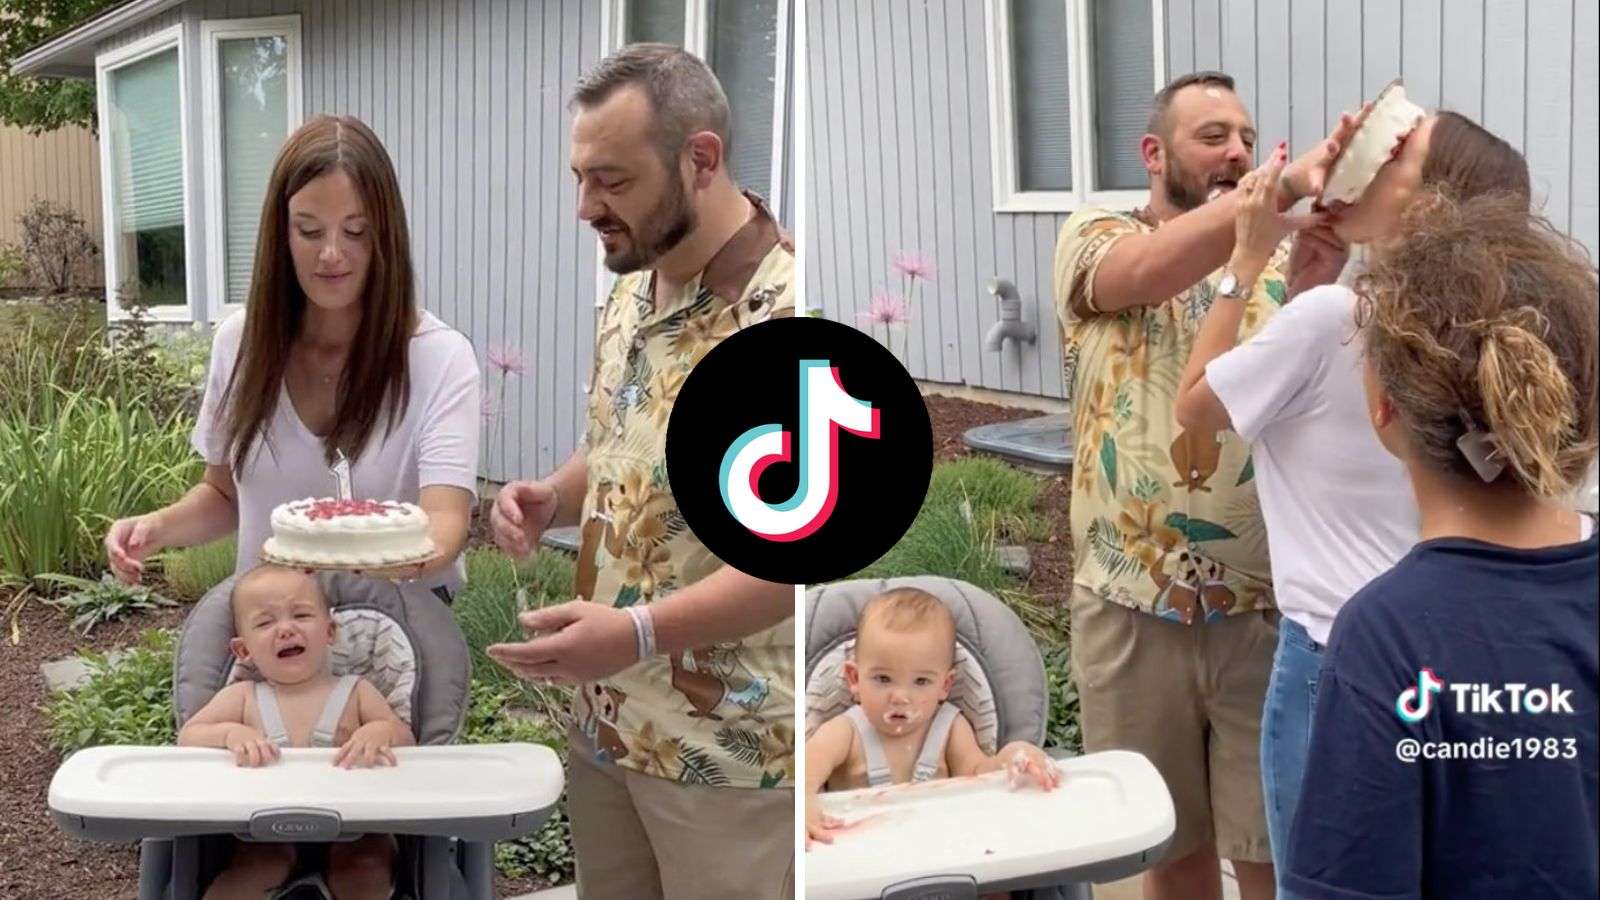 Husband smashing birthday cake onto his wife's face